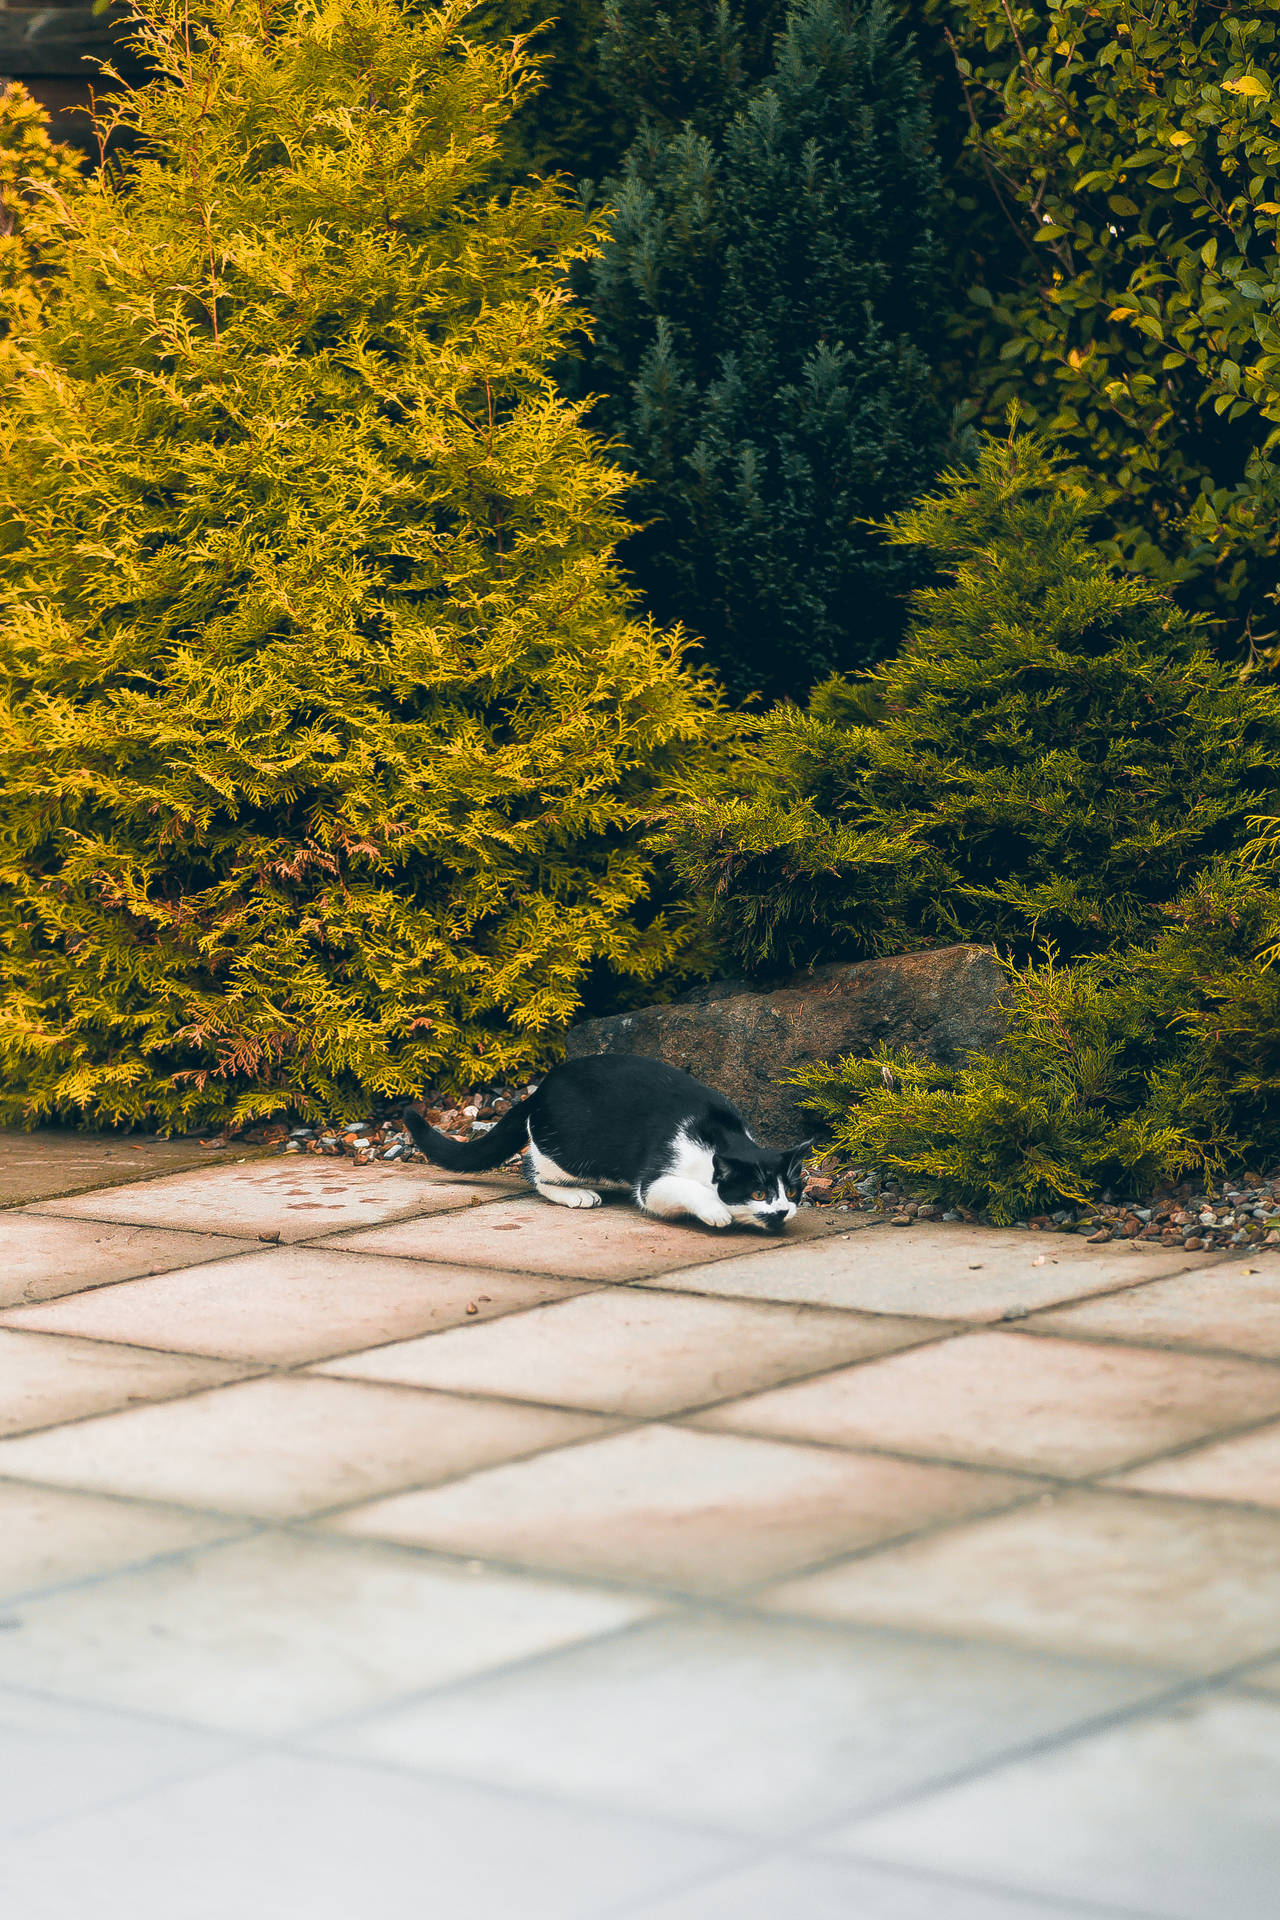 Kawaii Cat Sleeping Near Bushes